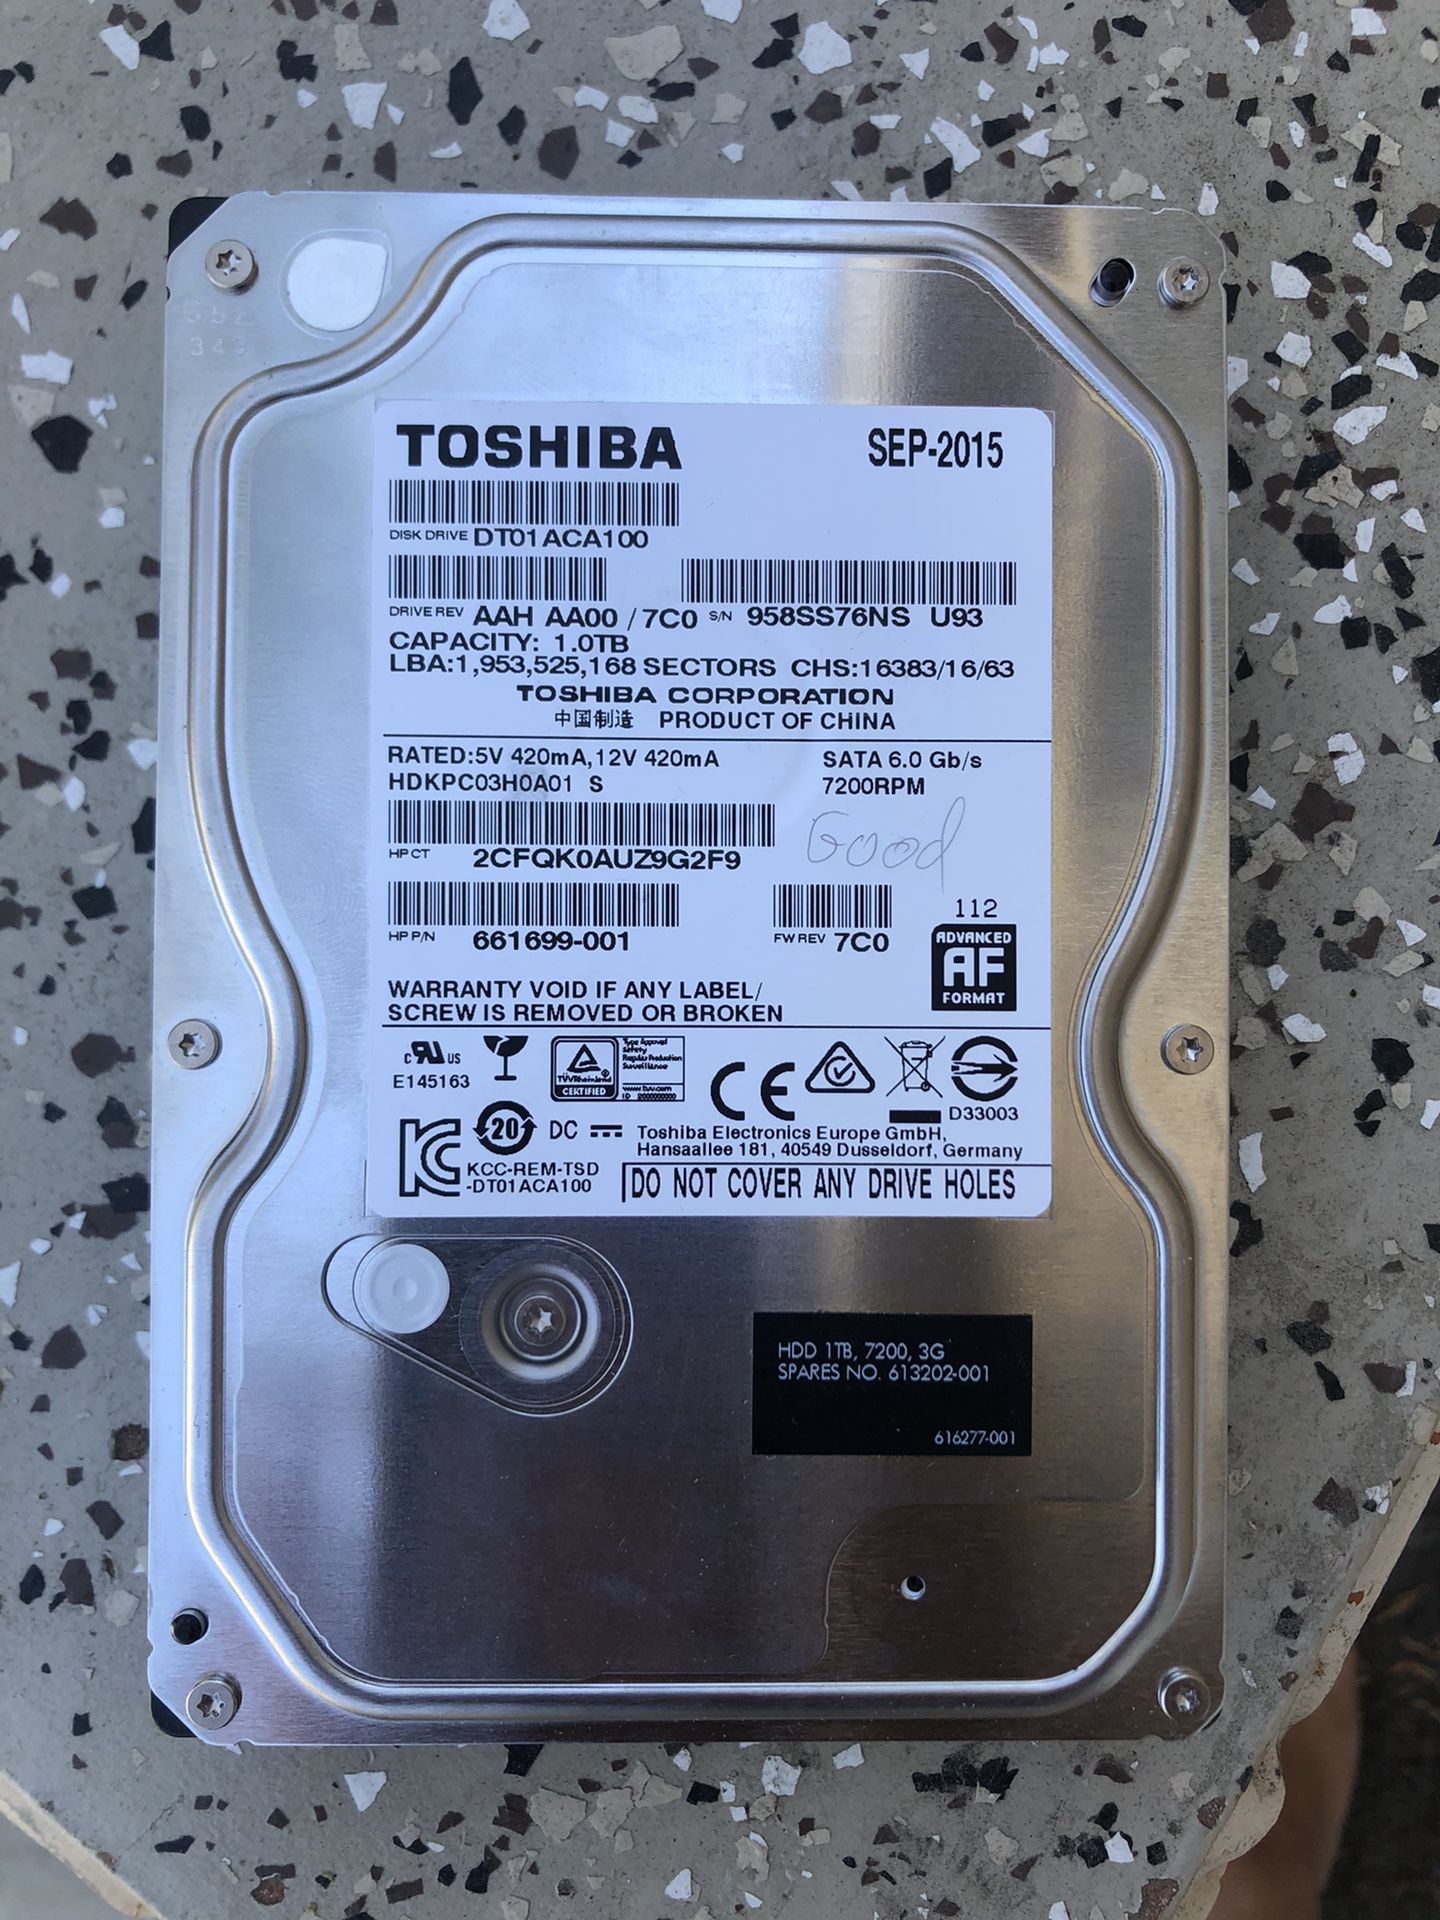 Toshiba 1.0TB - 1,000gb - Desktop Hard Drive